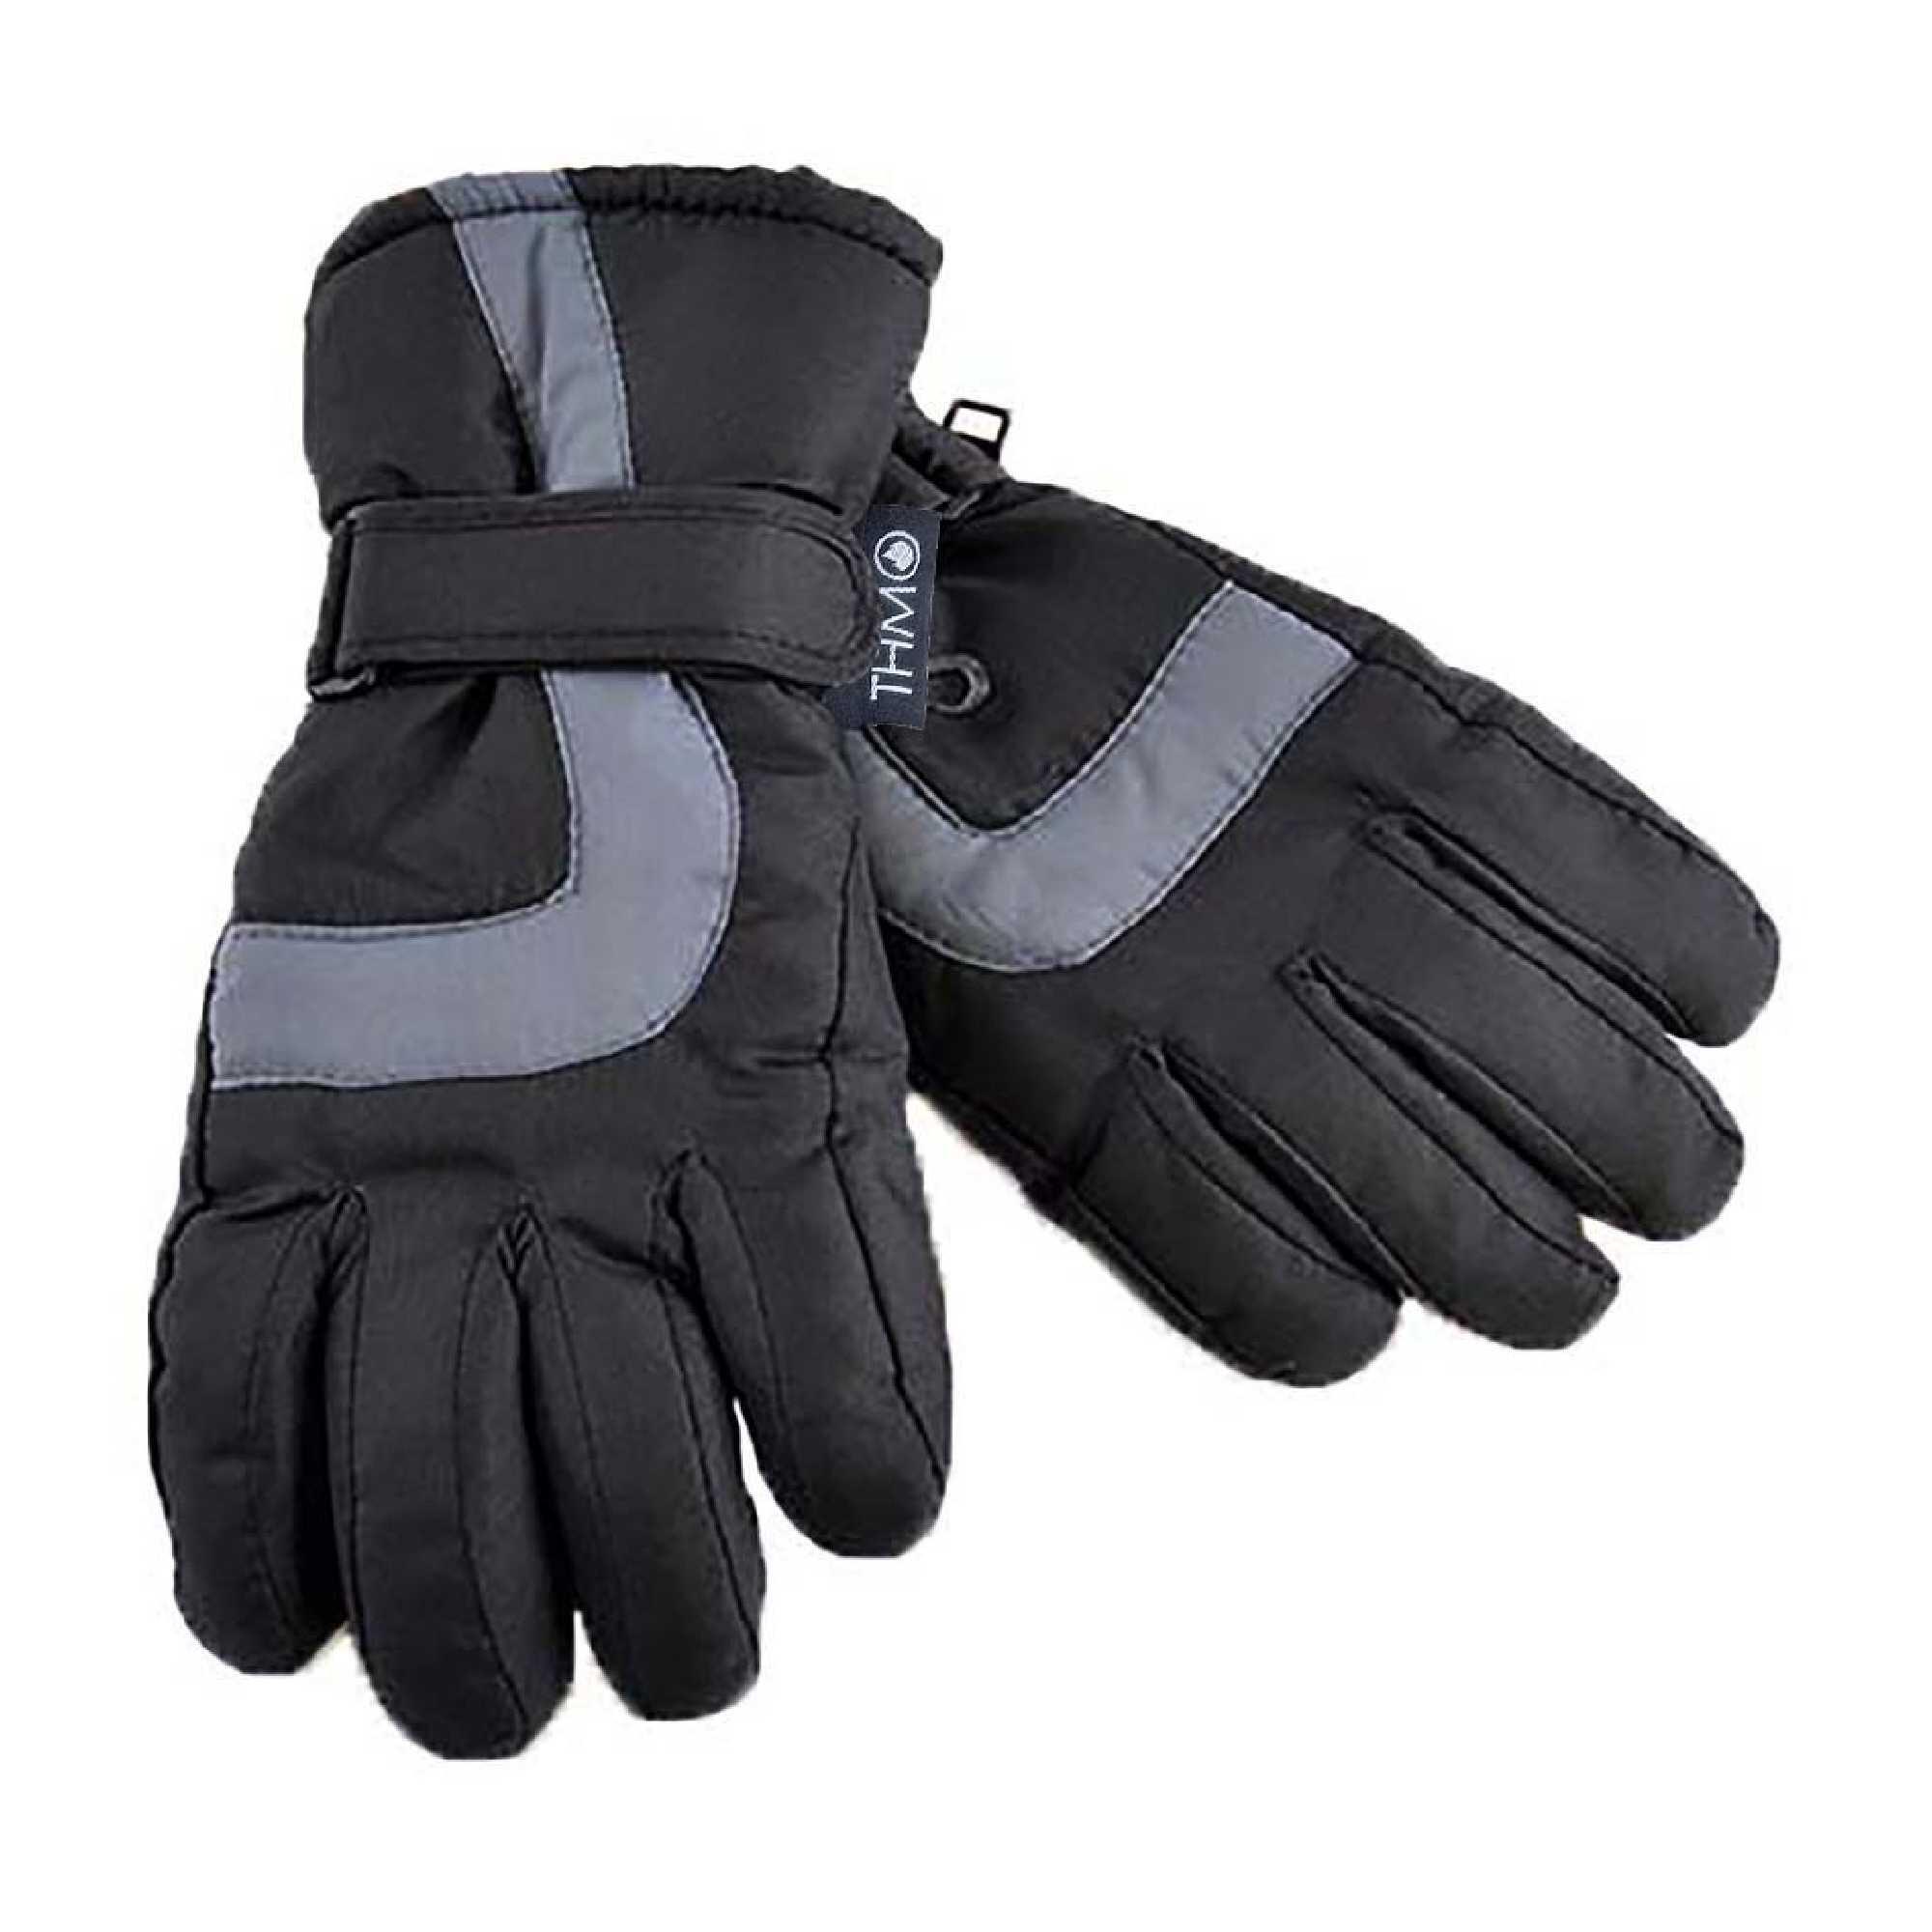 Kids Thinsulate Ski Gloves | Waterproof Fleece Lined Thermal Winter Ski Gloves 1/2